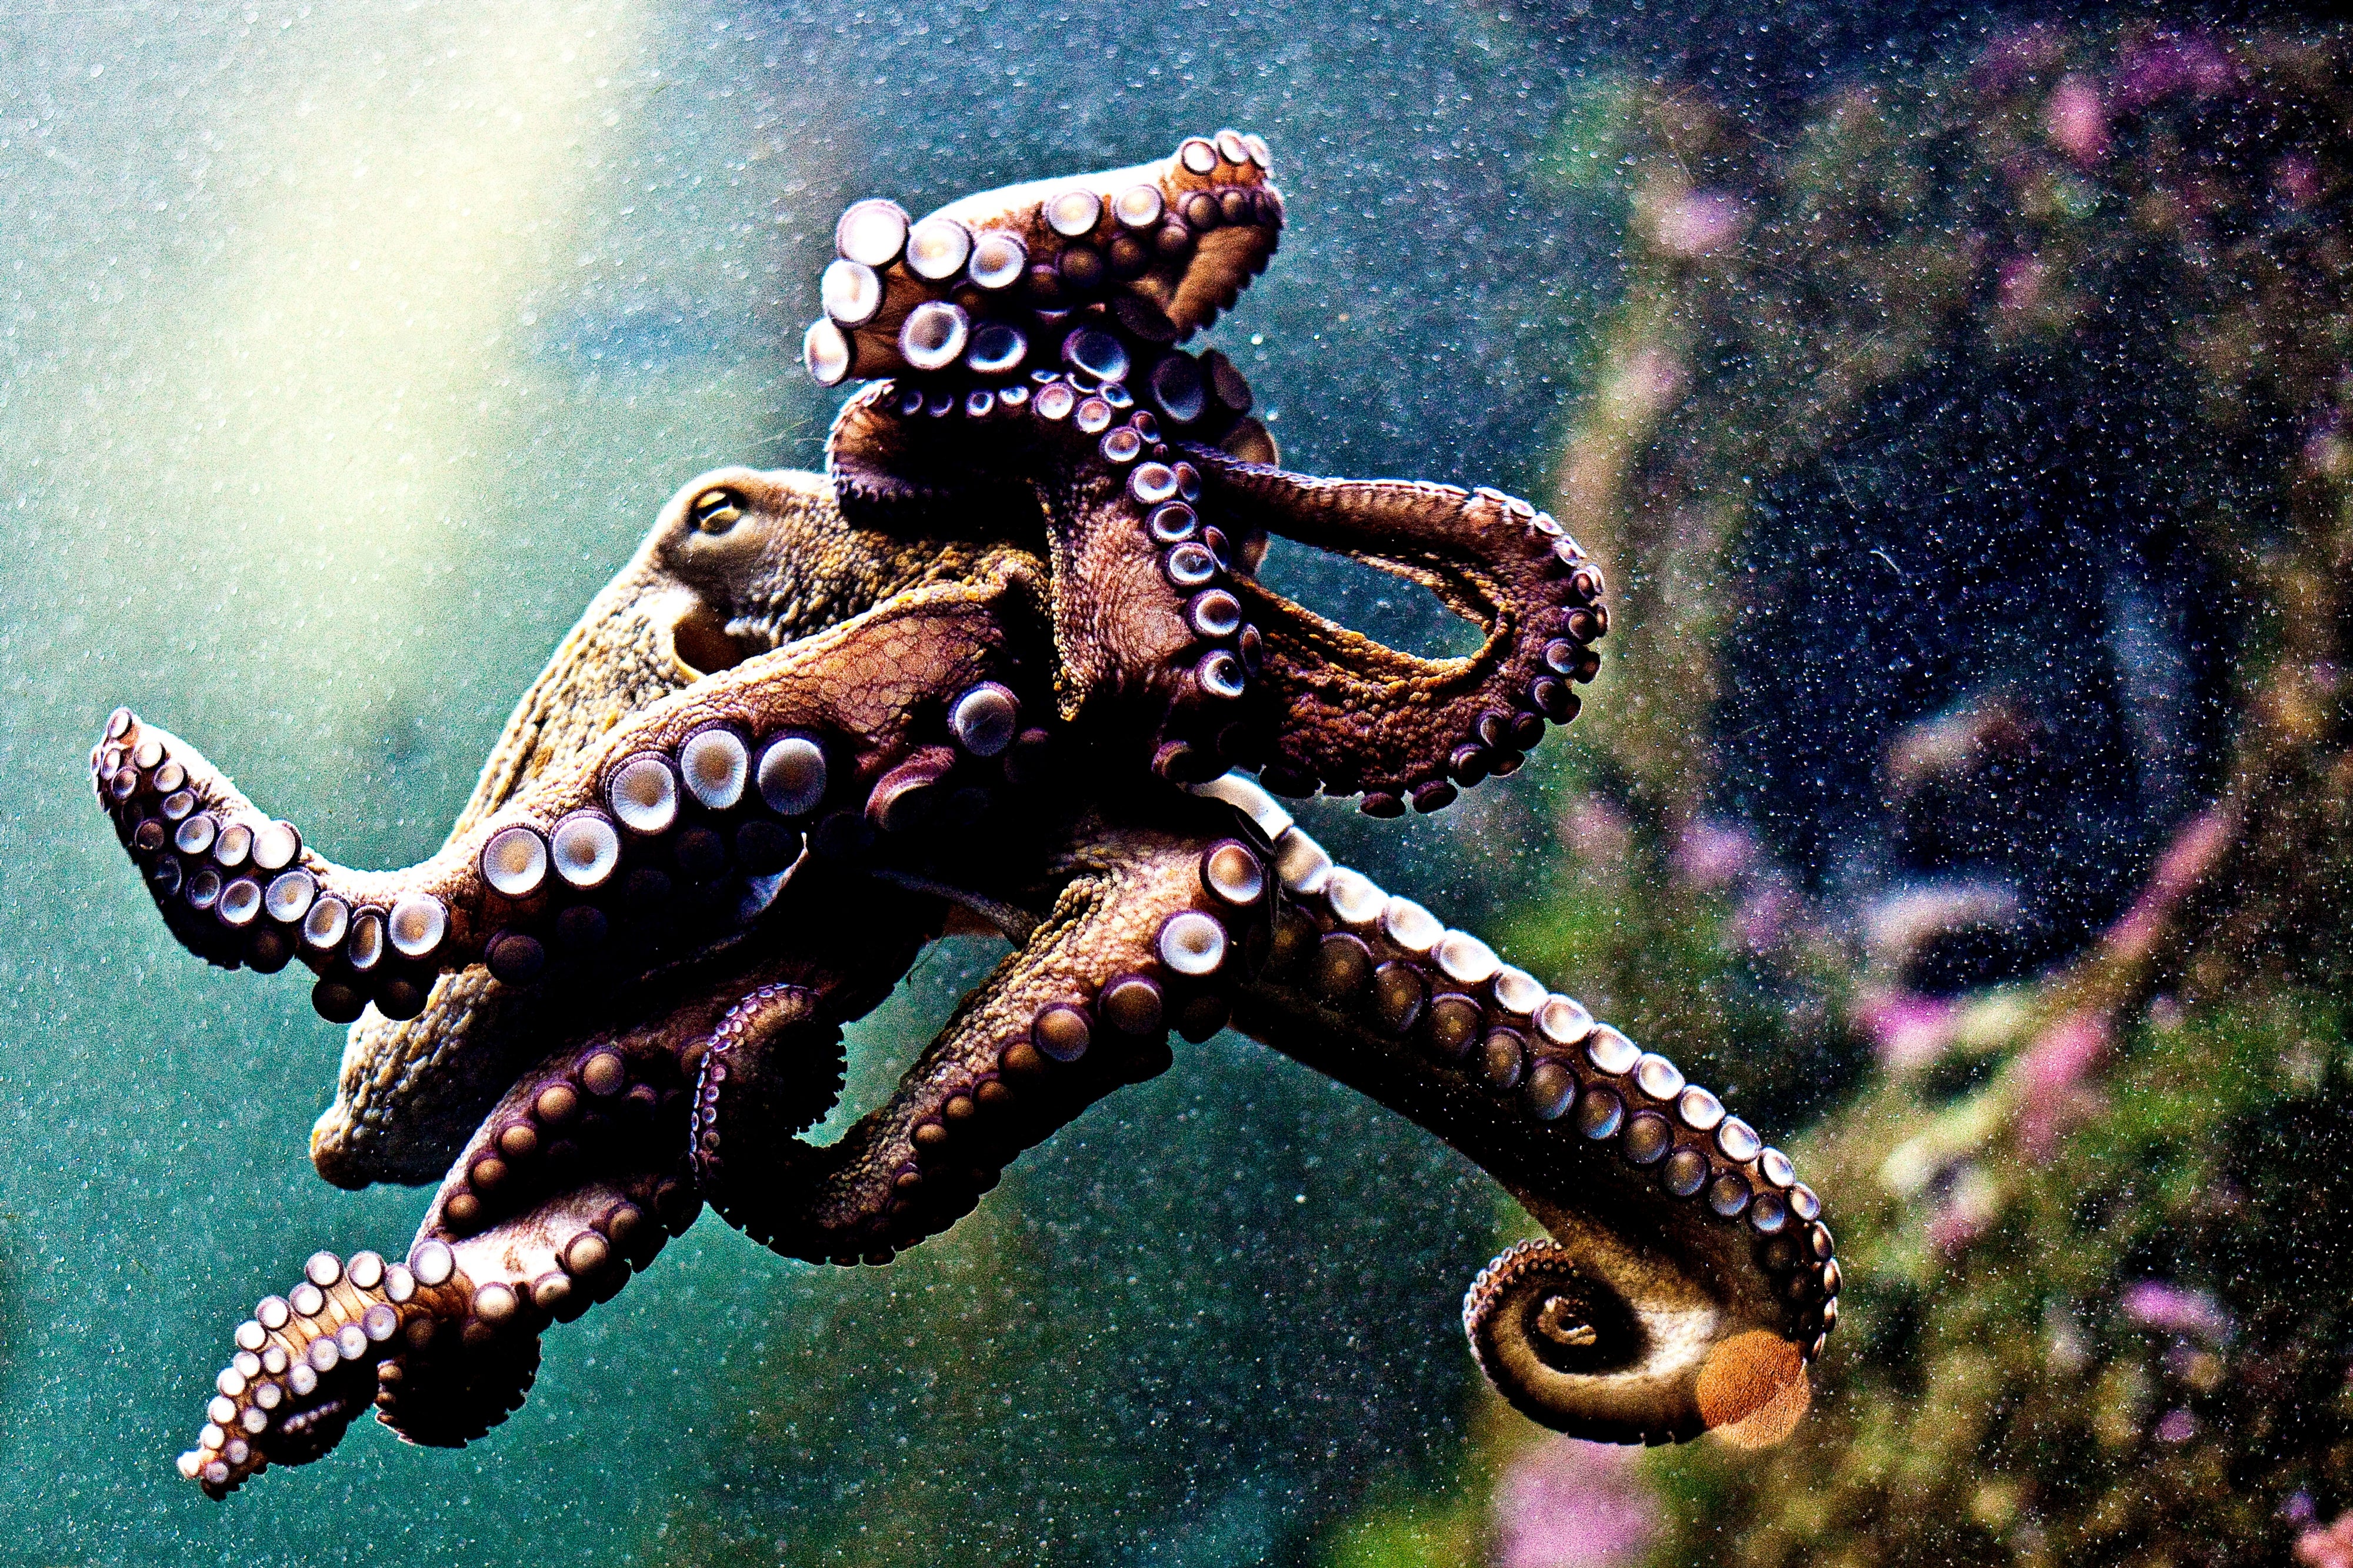 octopus and squid